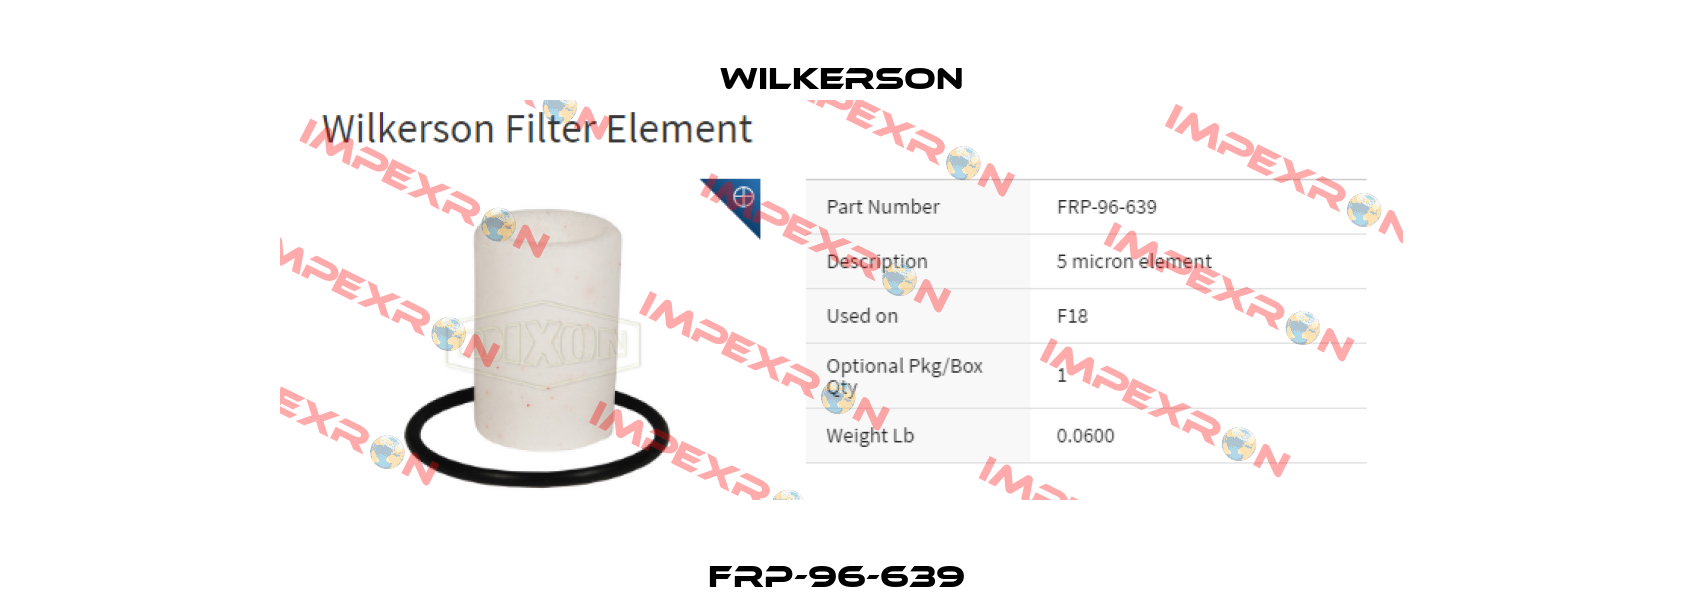 FRP-96-639  Wilkerson